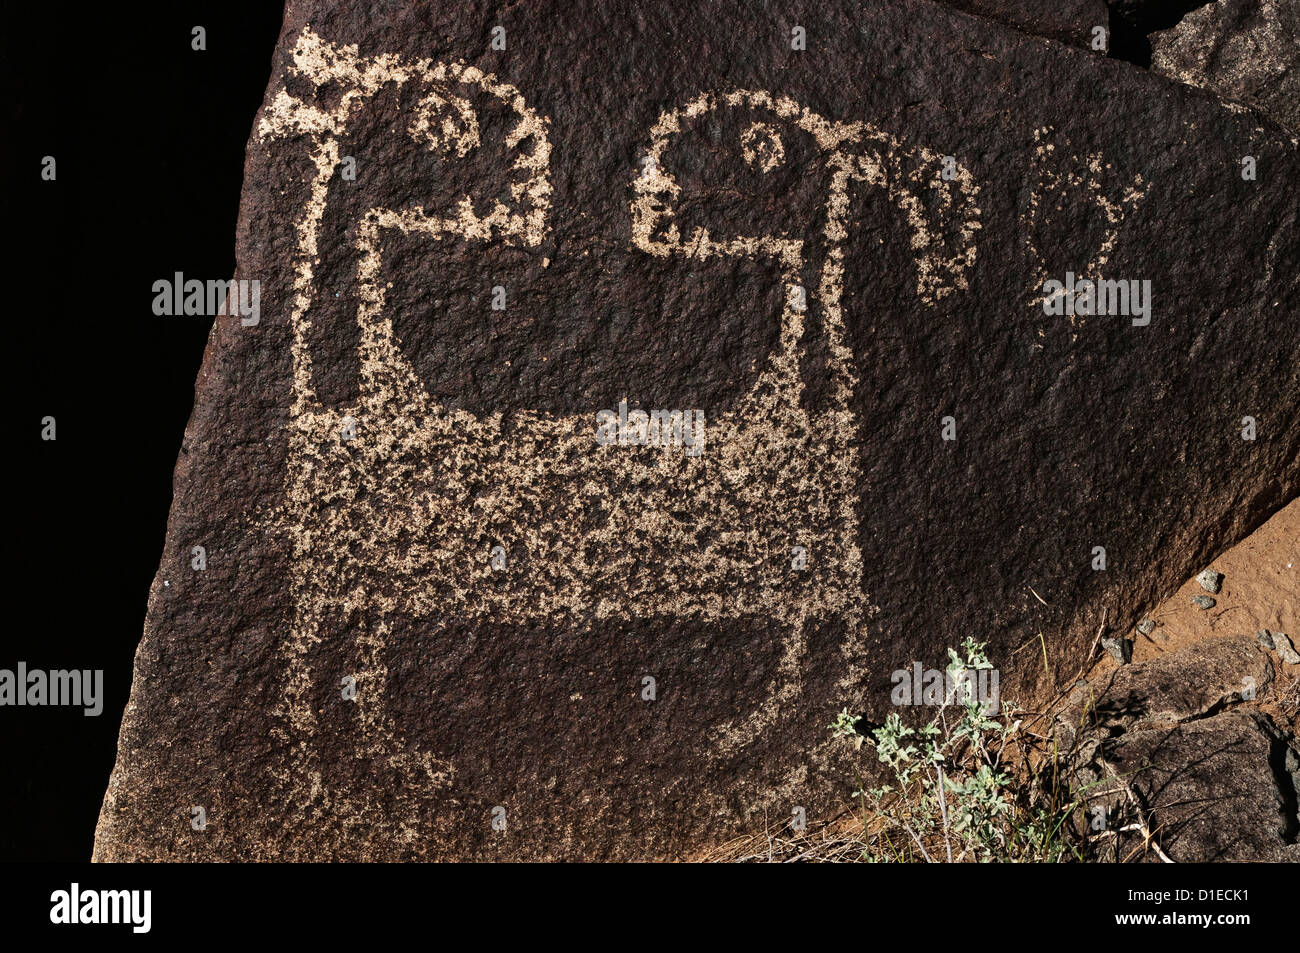 Two-headed goat in Jornada Mogollon style rock art at Three Rivers Petroglyph Site, near Sierra Blanca, New Mexico, USA Stock Photo